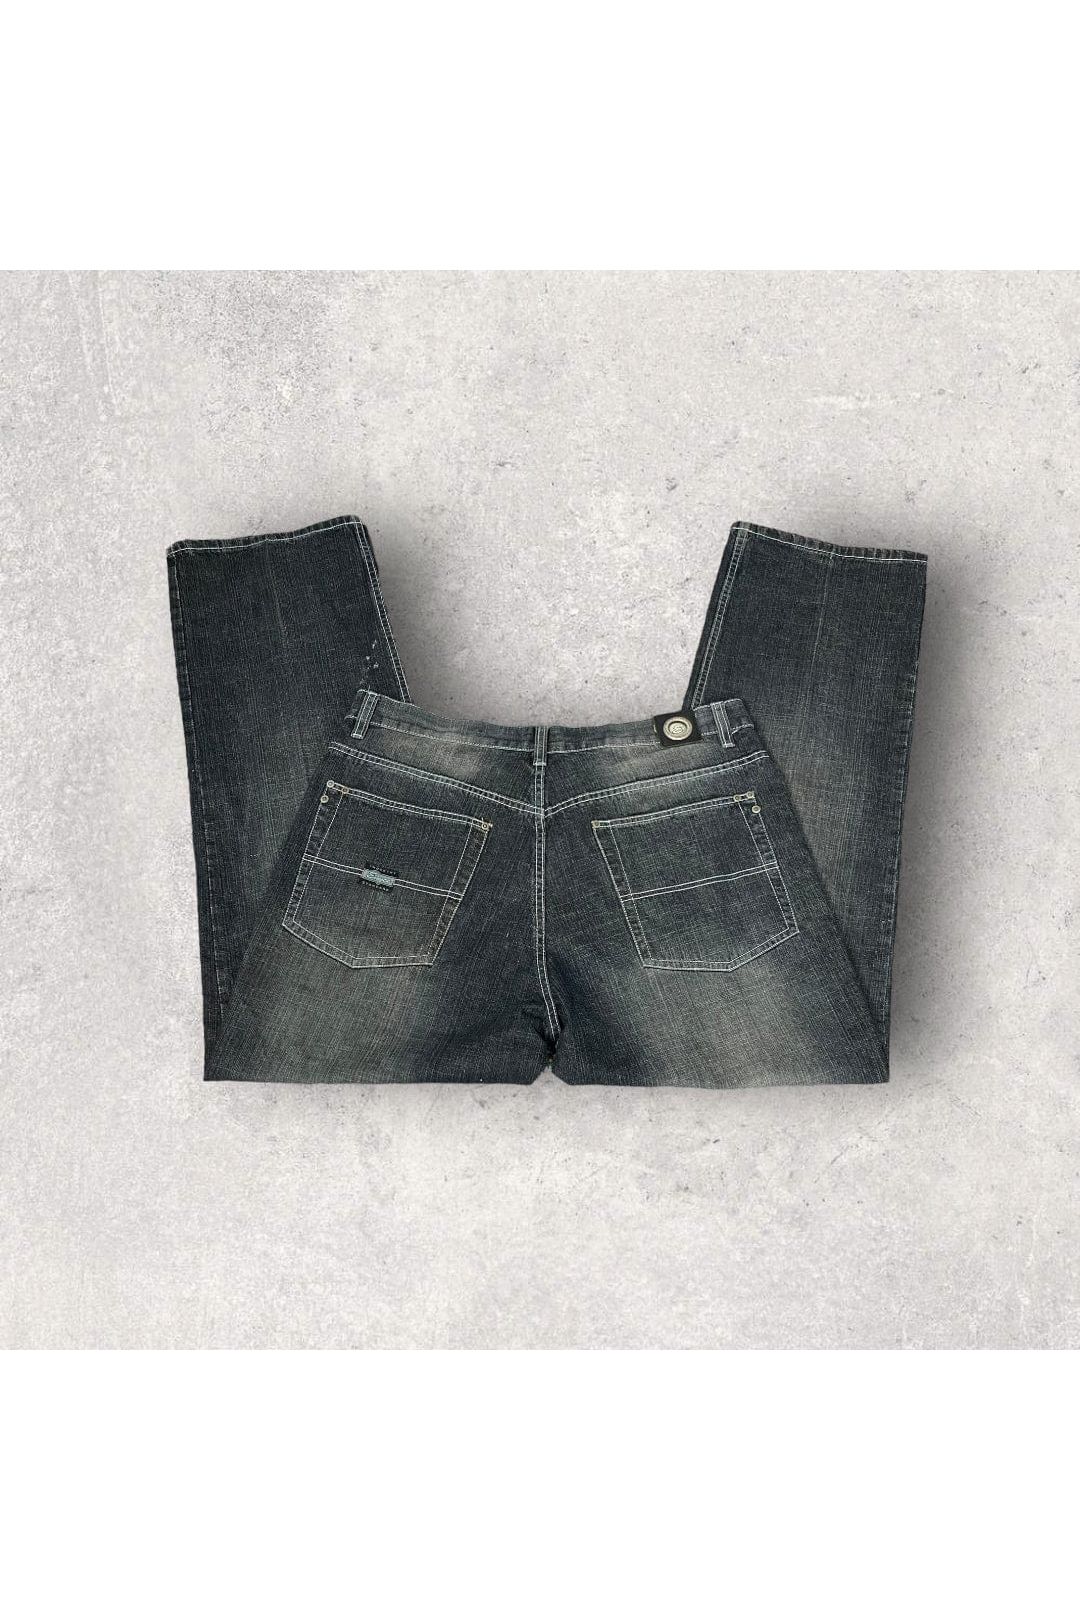 Vintage 2000s ENYCE Jeans- SZ 38